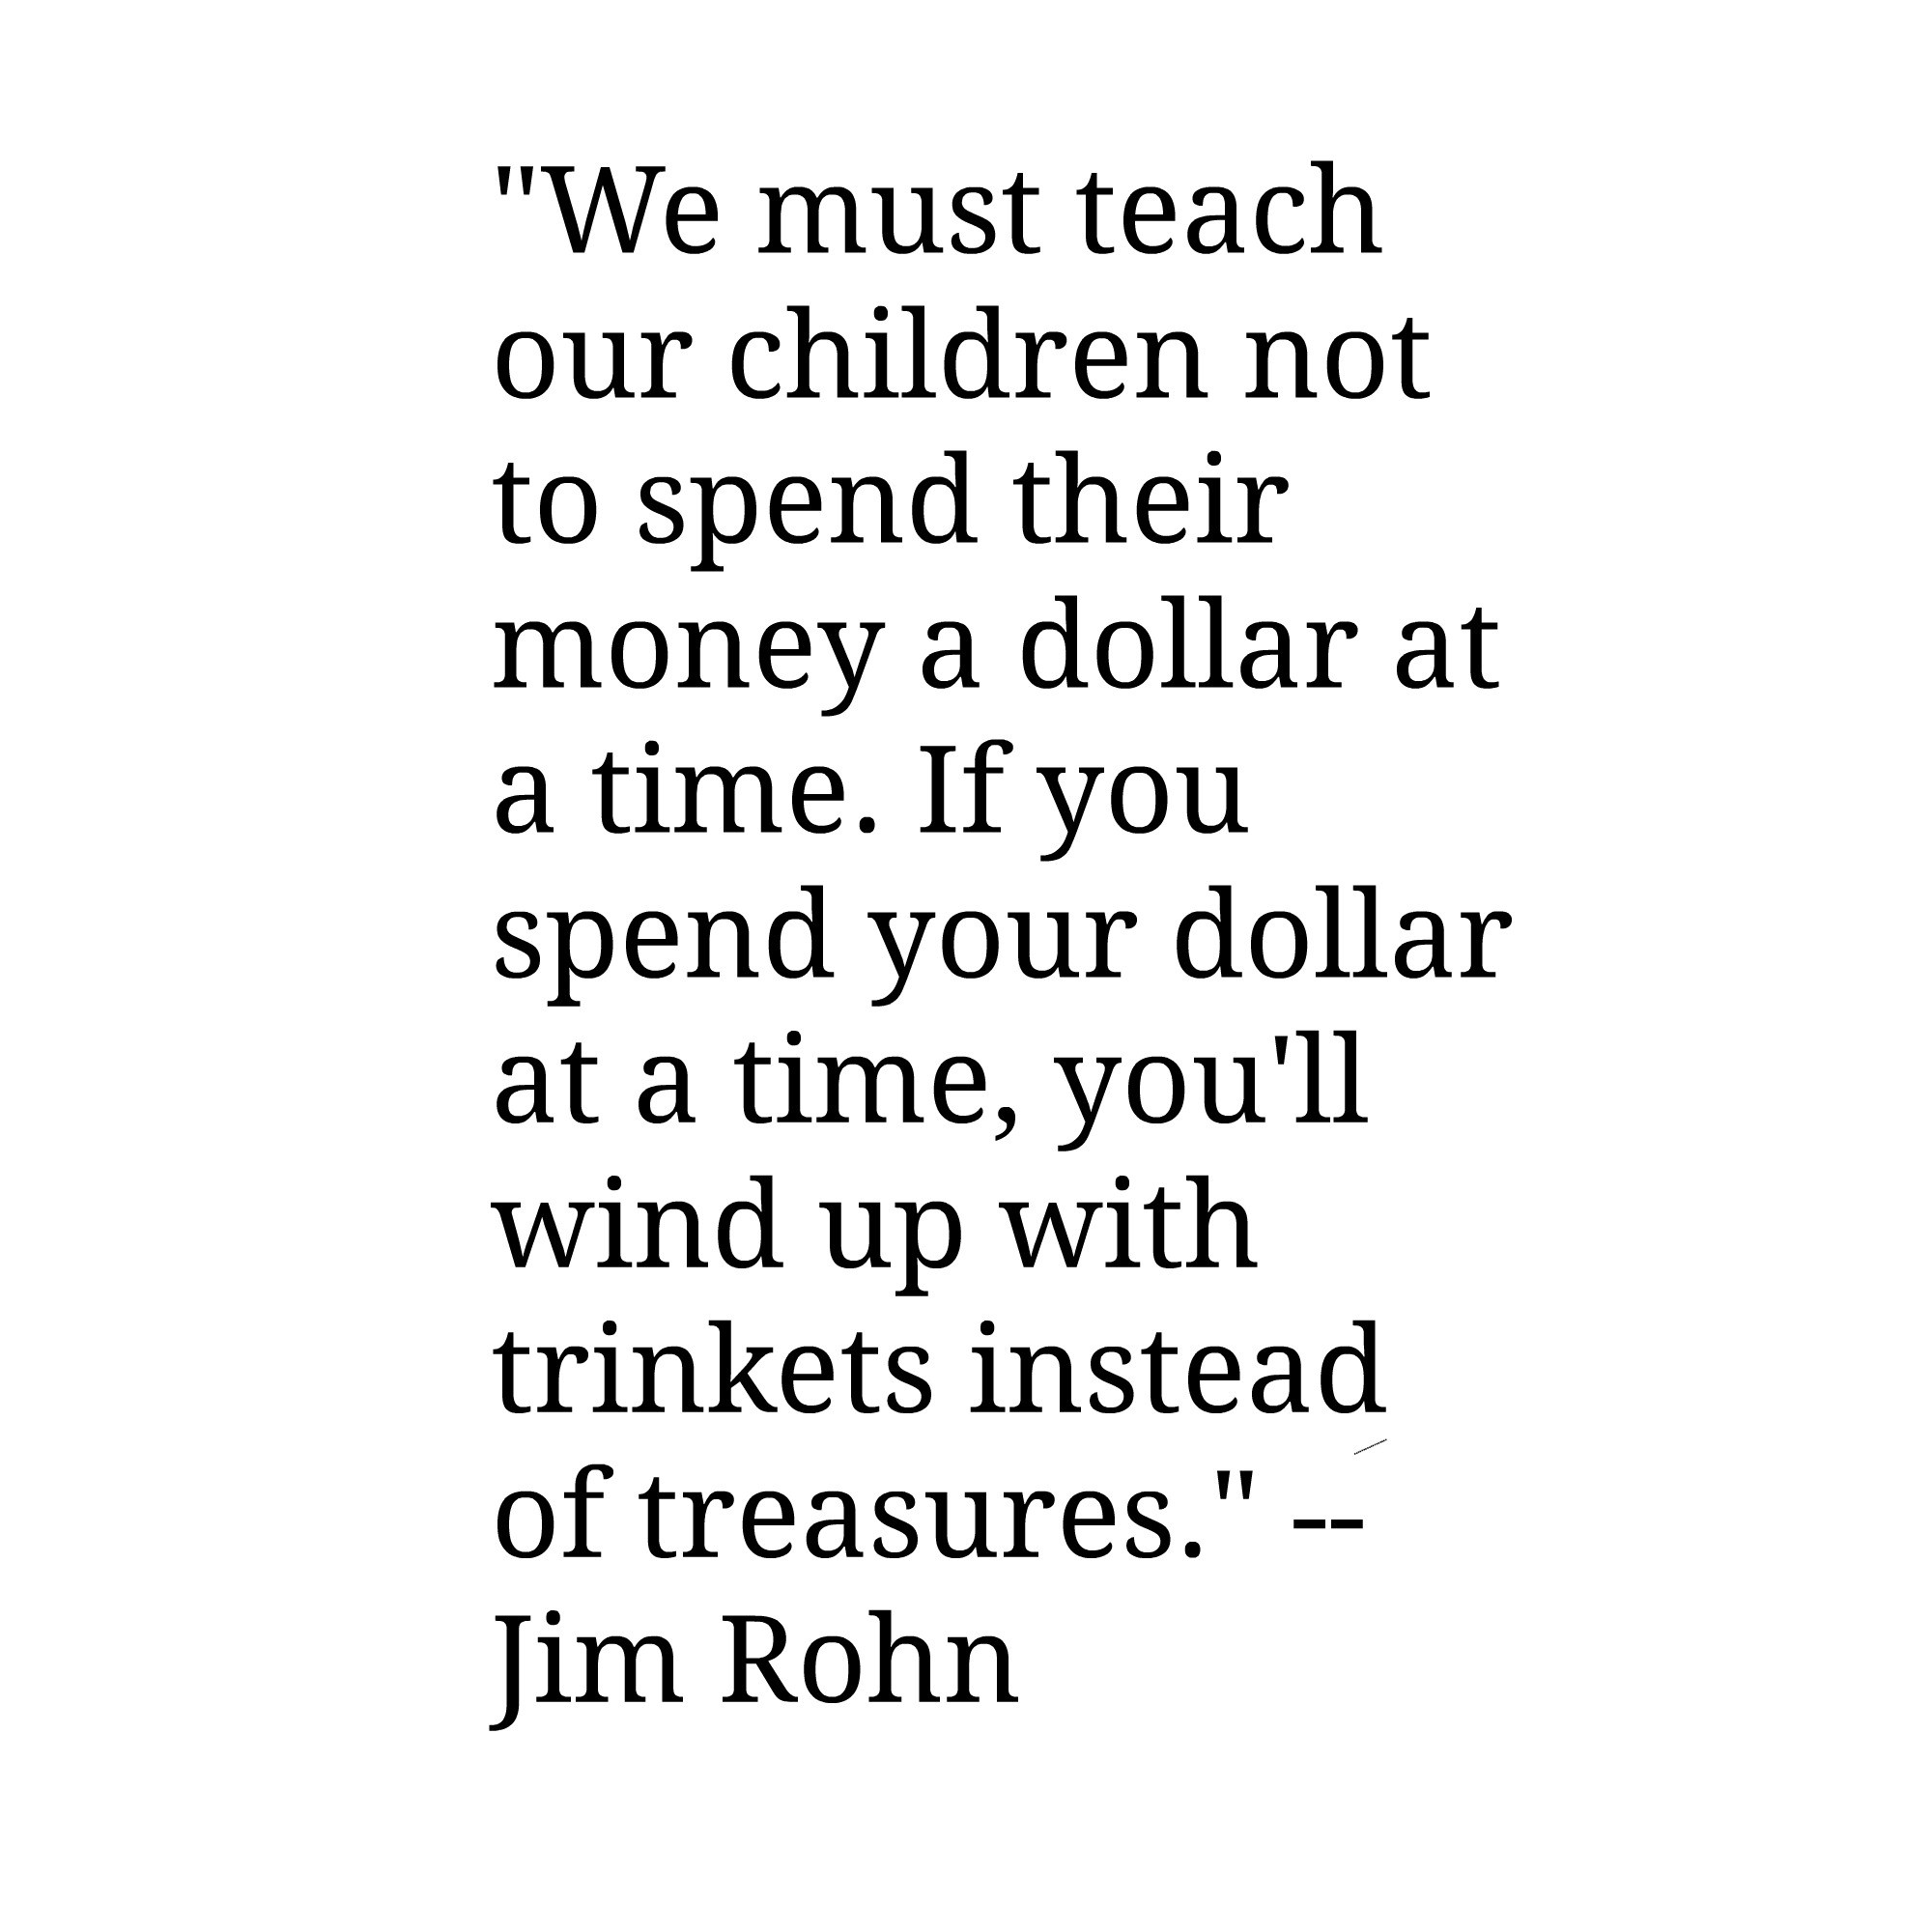 Jim Rohn Quote